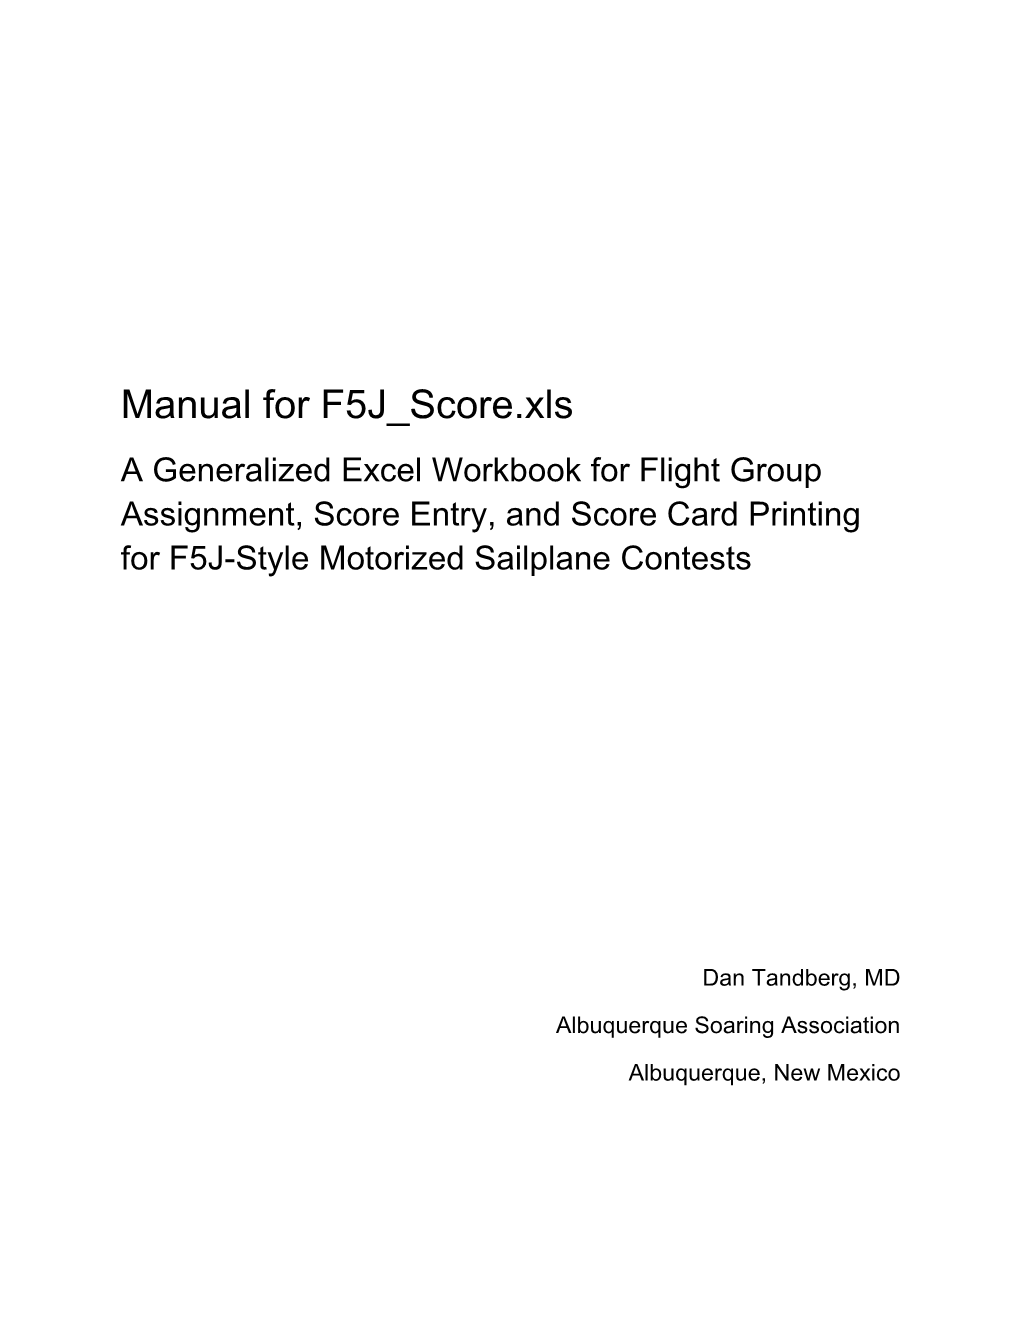 Manual for F5J Score.Xls